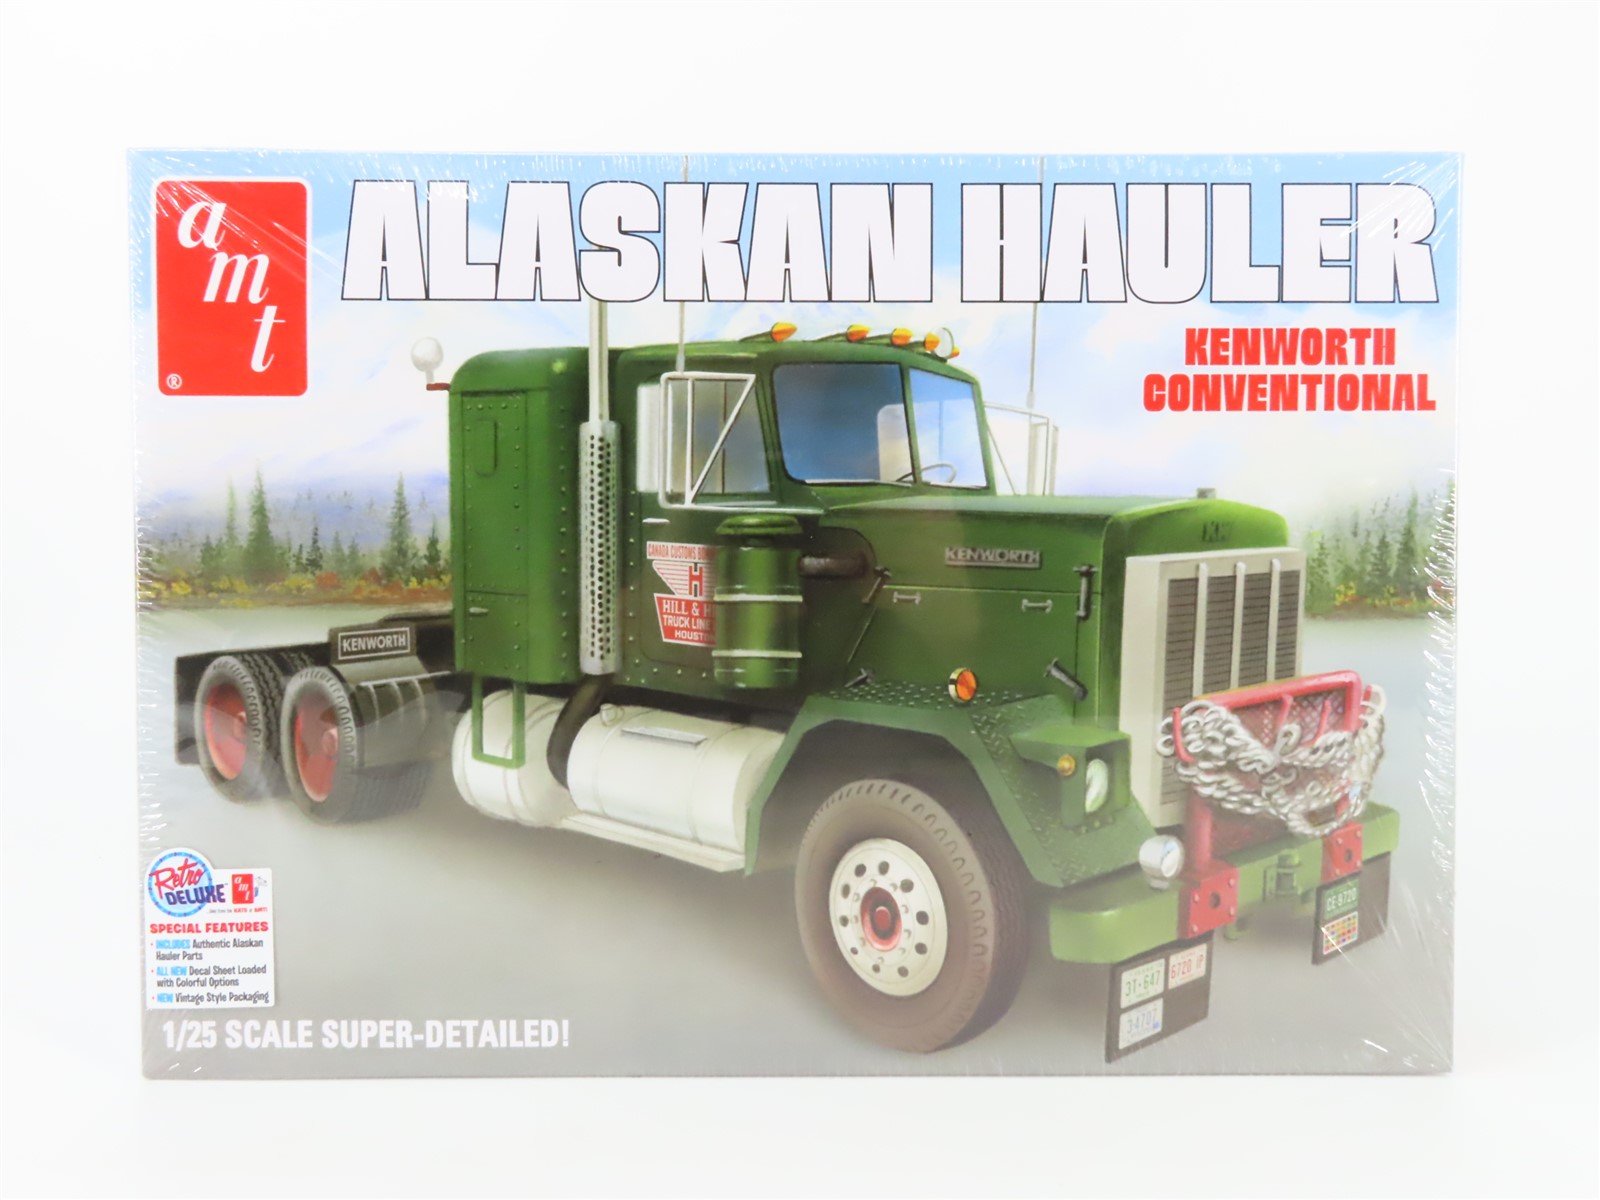 1:25 Scale AMT 1339/06 Kenworth Conventional Alaskan Hauler Truck Kit - Sealed